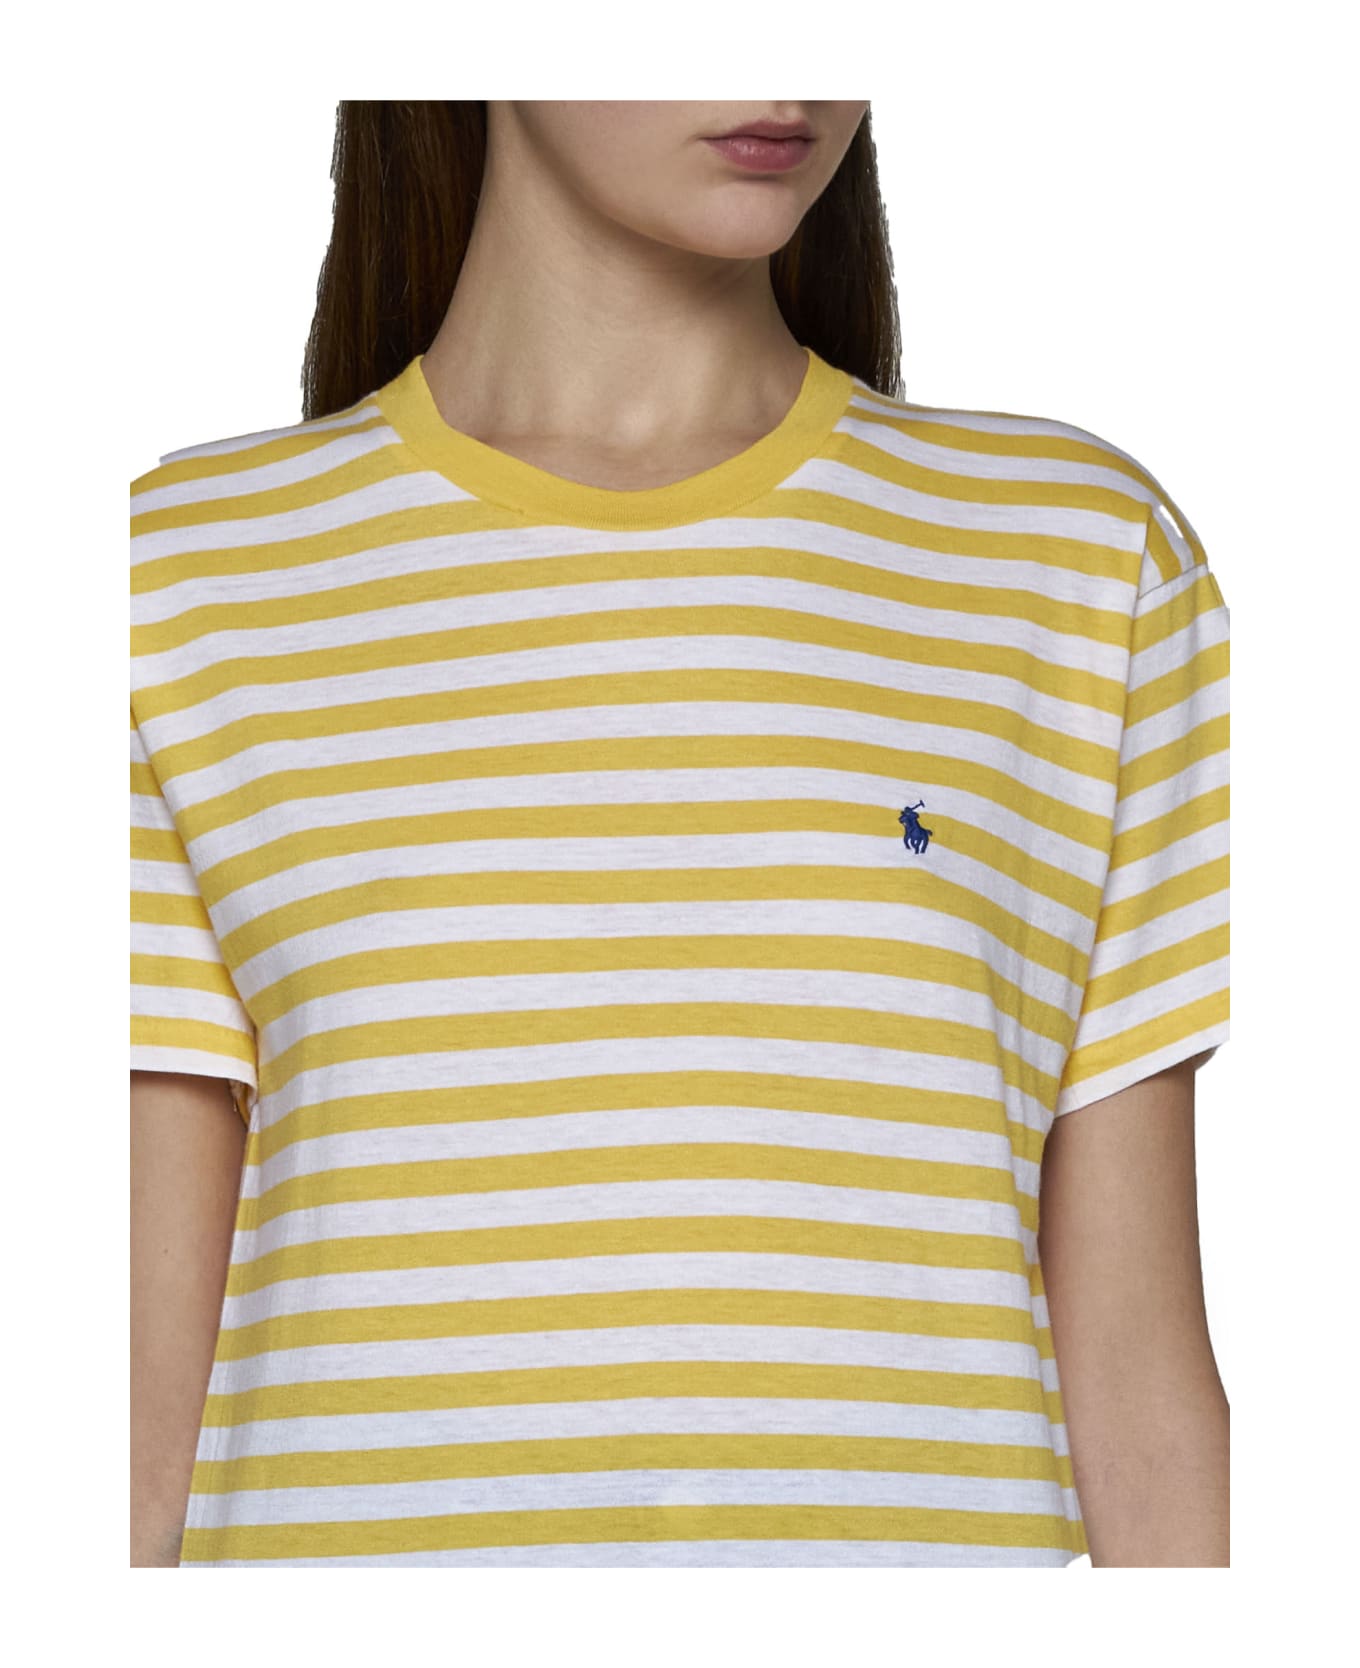 Polo Ralph Lauren T-Shirt - Chrome yellow/white Tシャツ